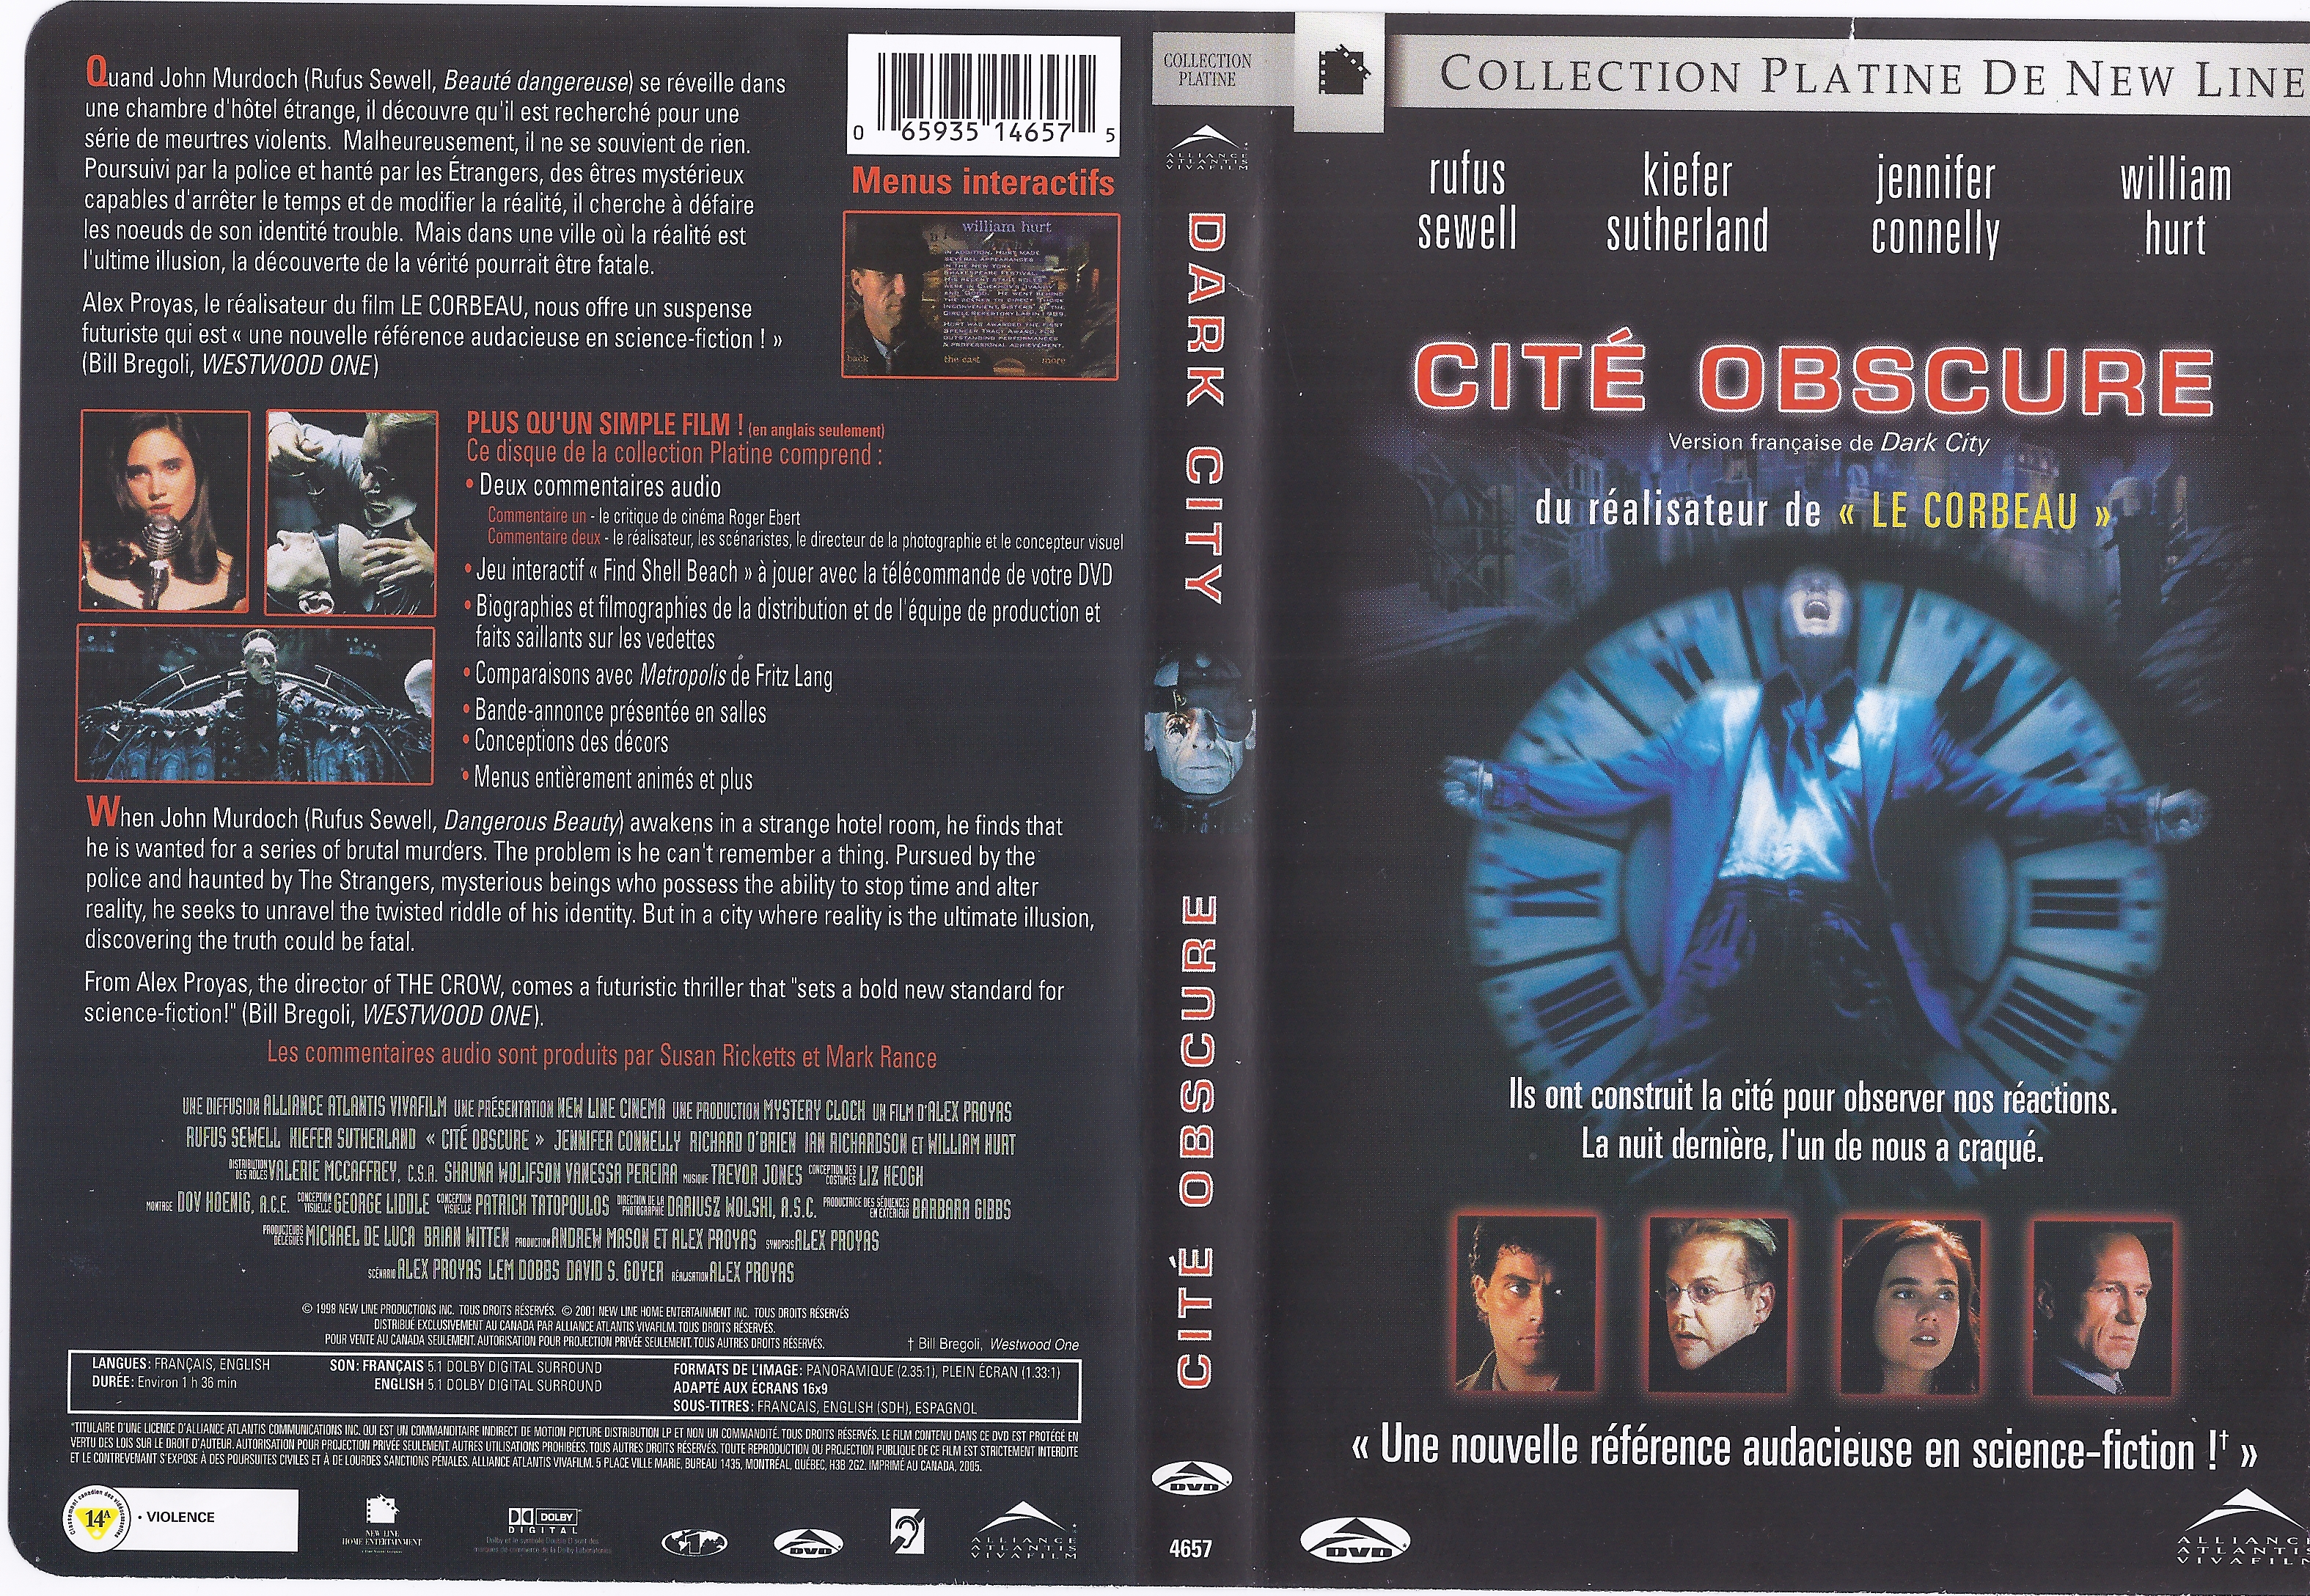 Jaquette DVD Cit Obscure - Dark City (Canadienne)